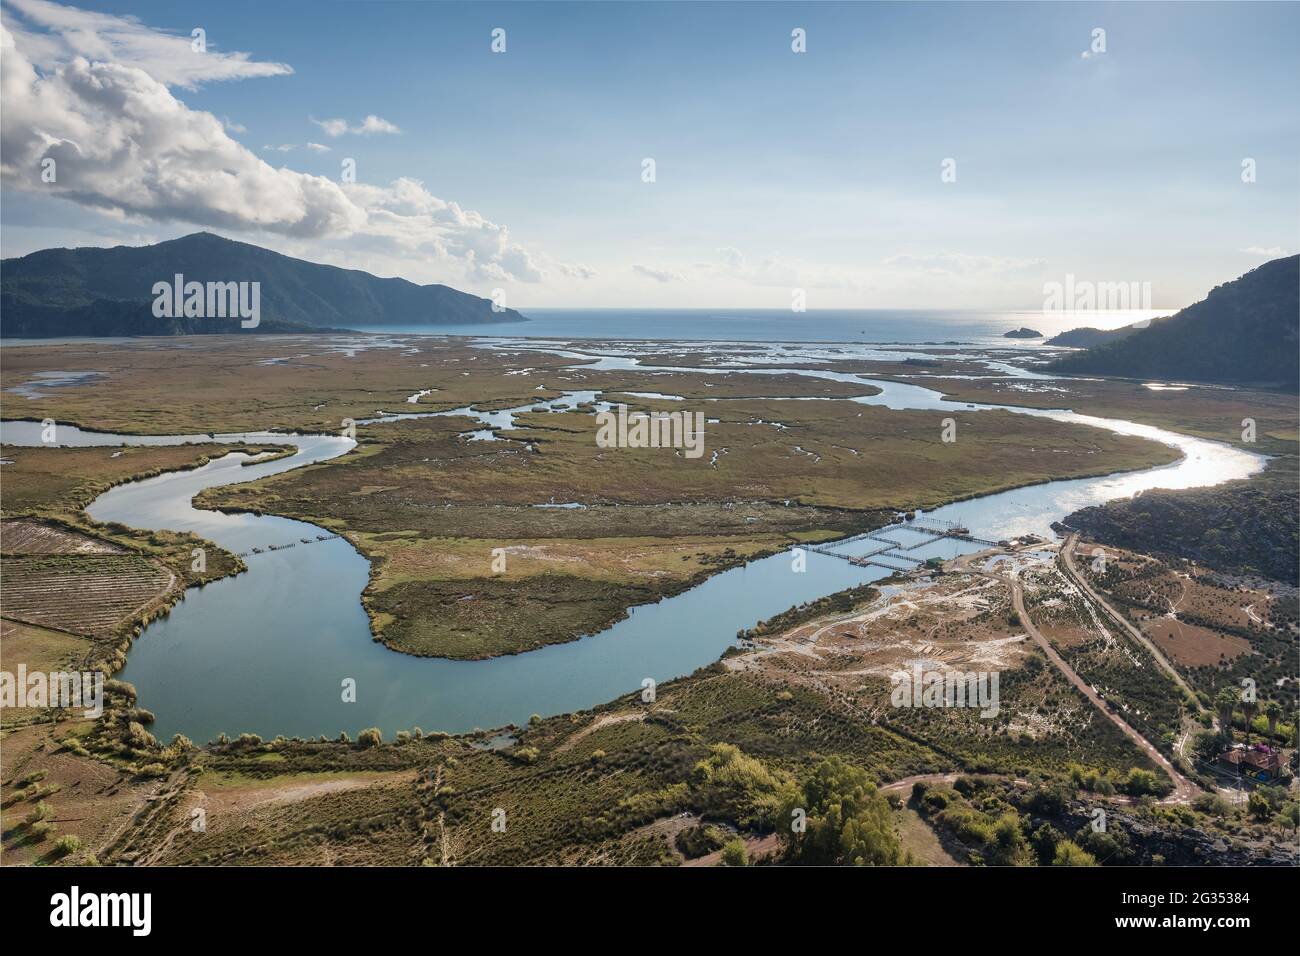 Dalyan river delta, Iztuzu beach and the surrounding mountains in Dalyan, Turkey Stock Photo